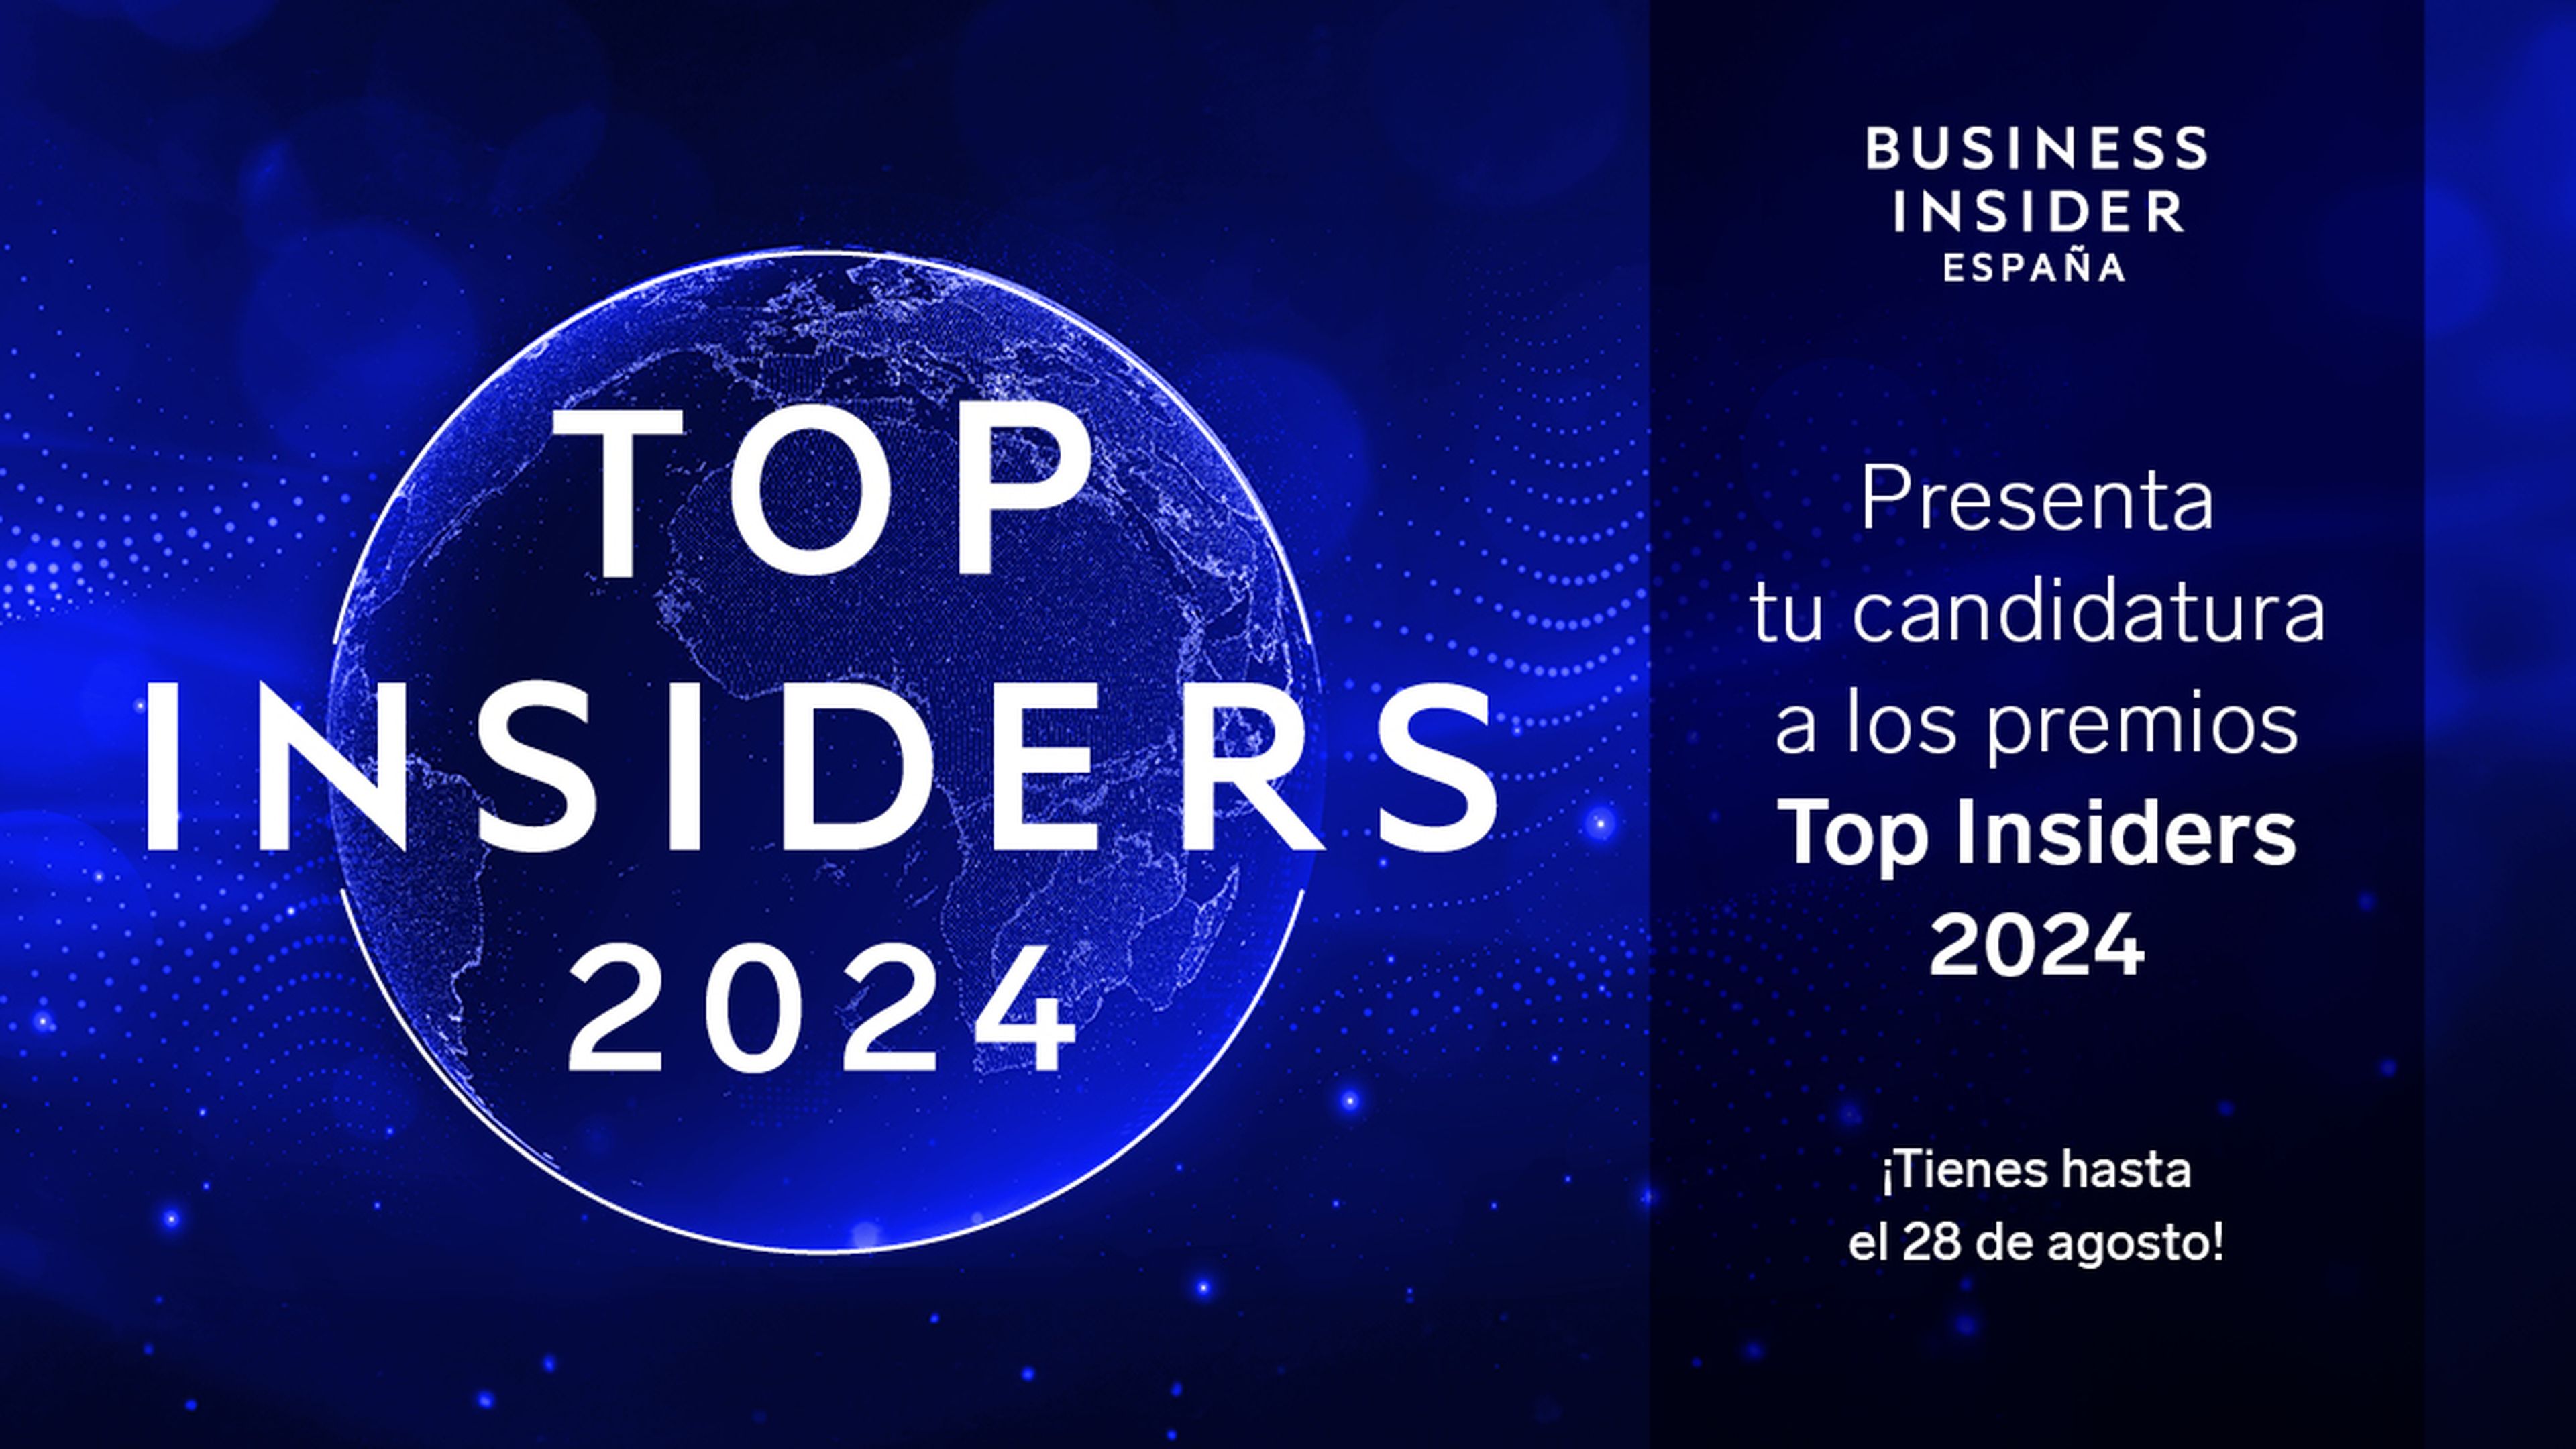 Top Insiders 2024